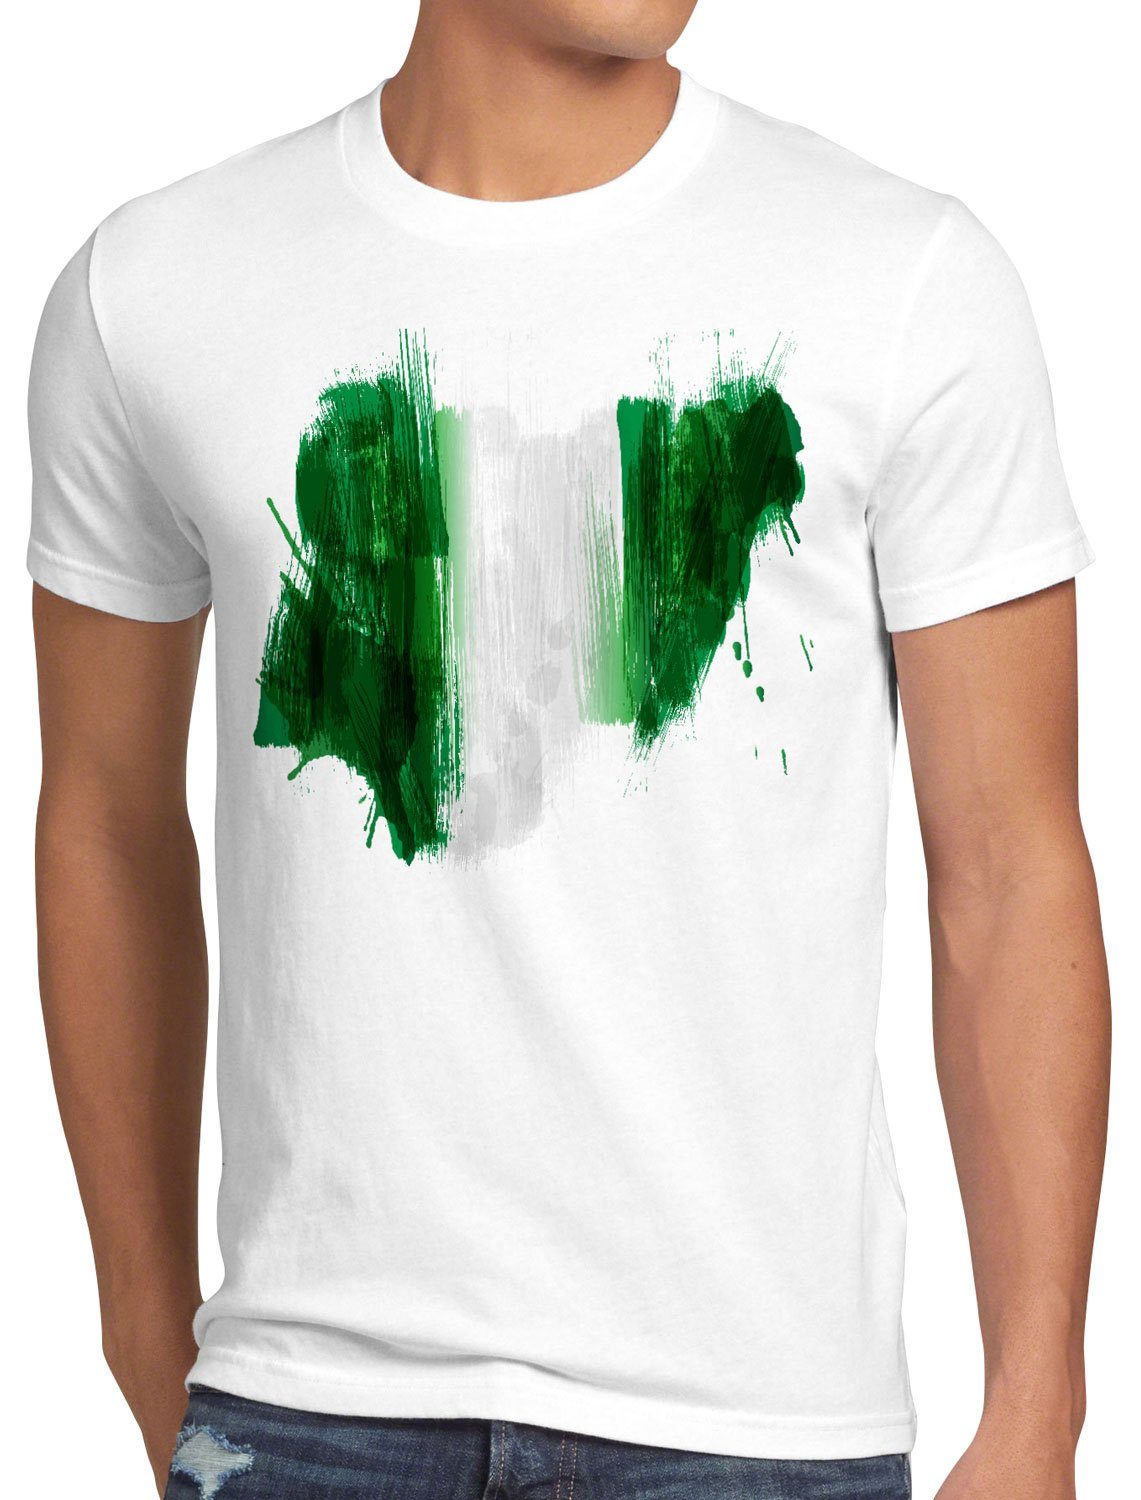 Print-Shirt weiß Flagge Nigeria Afrika EM Fahne style3 WM T-Shirt Sport Fußball Herren